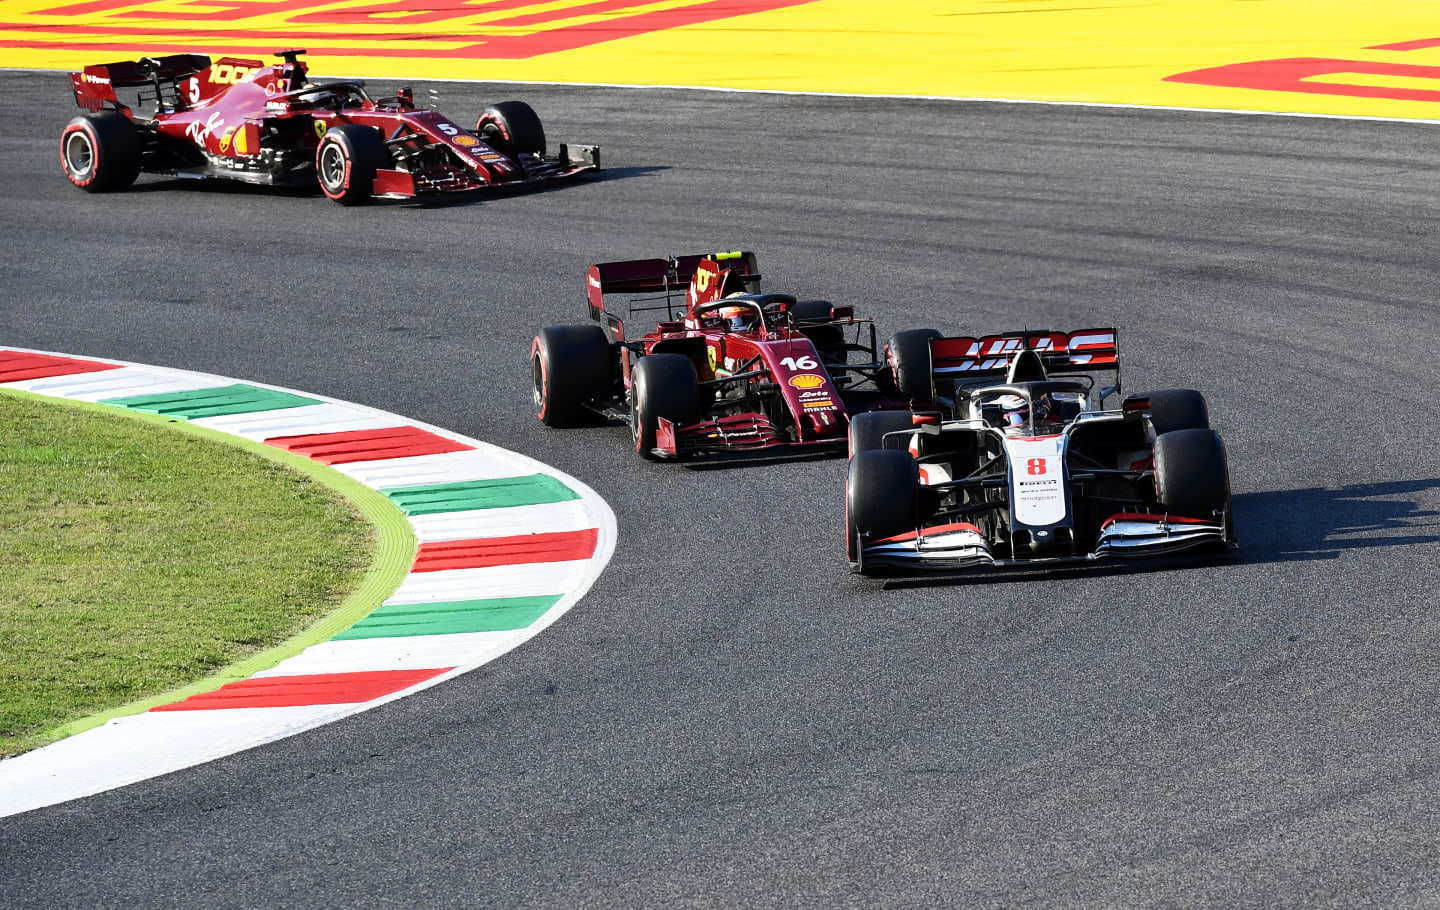 SCARPERIA, ITALY - SEPTEMBER 13: Romain Grosjean of France driving the (8) Haas F1 Team VF-20